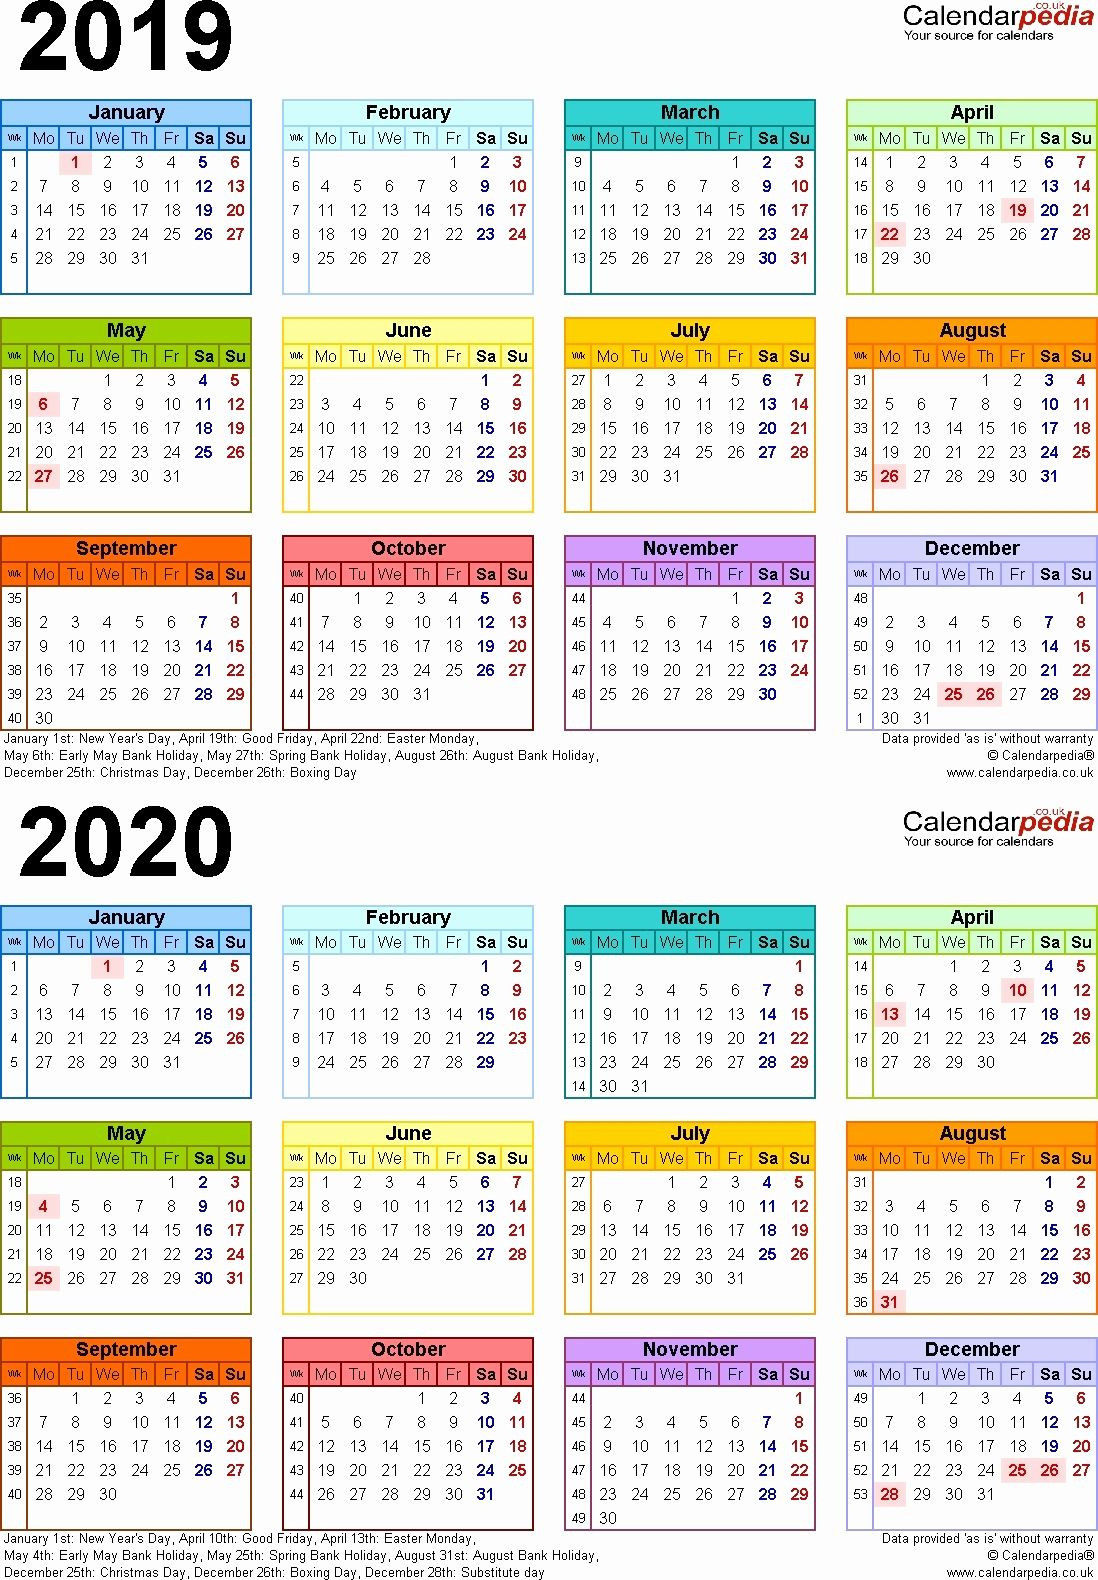 20+ Calendar 2021 Qld - Free Download Printable Calendar-Queensland 2021 Calender